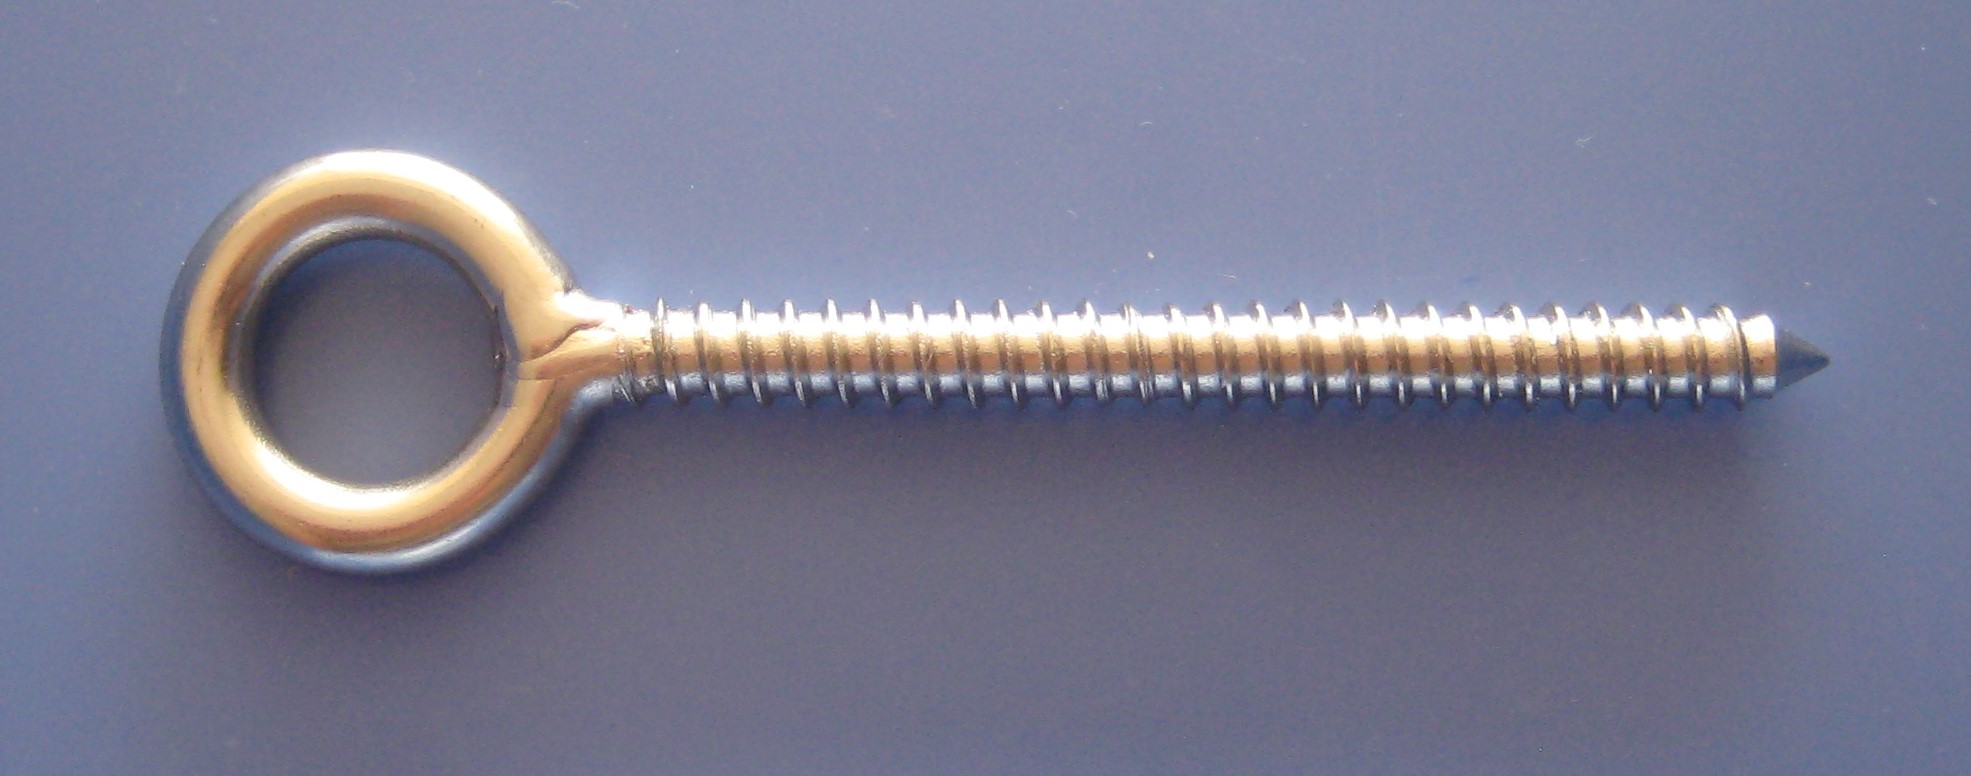 Model : 05037-8-80 Eye screws